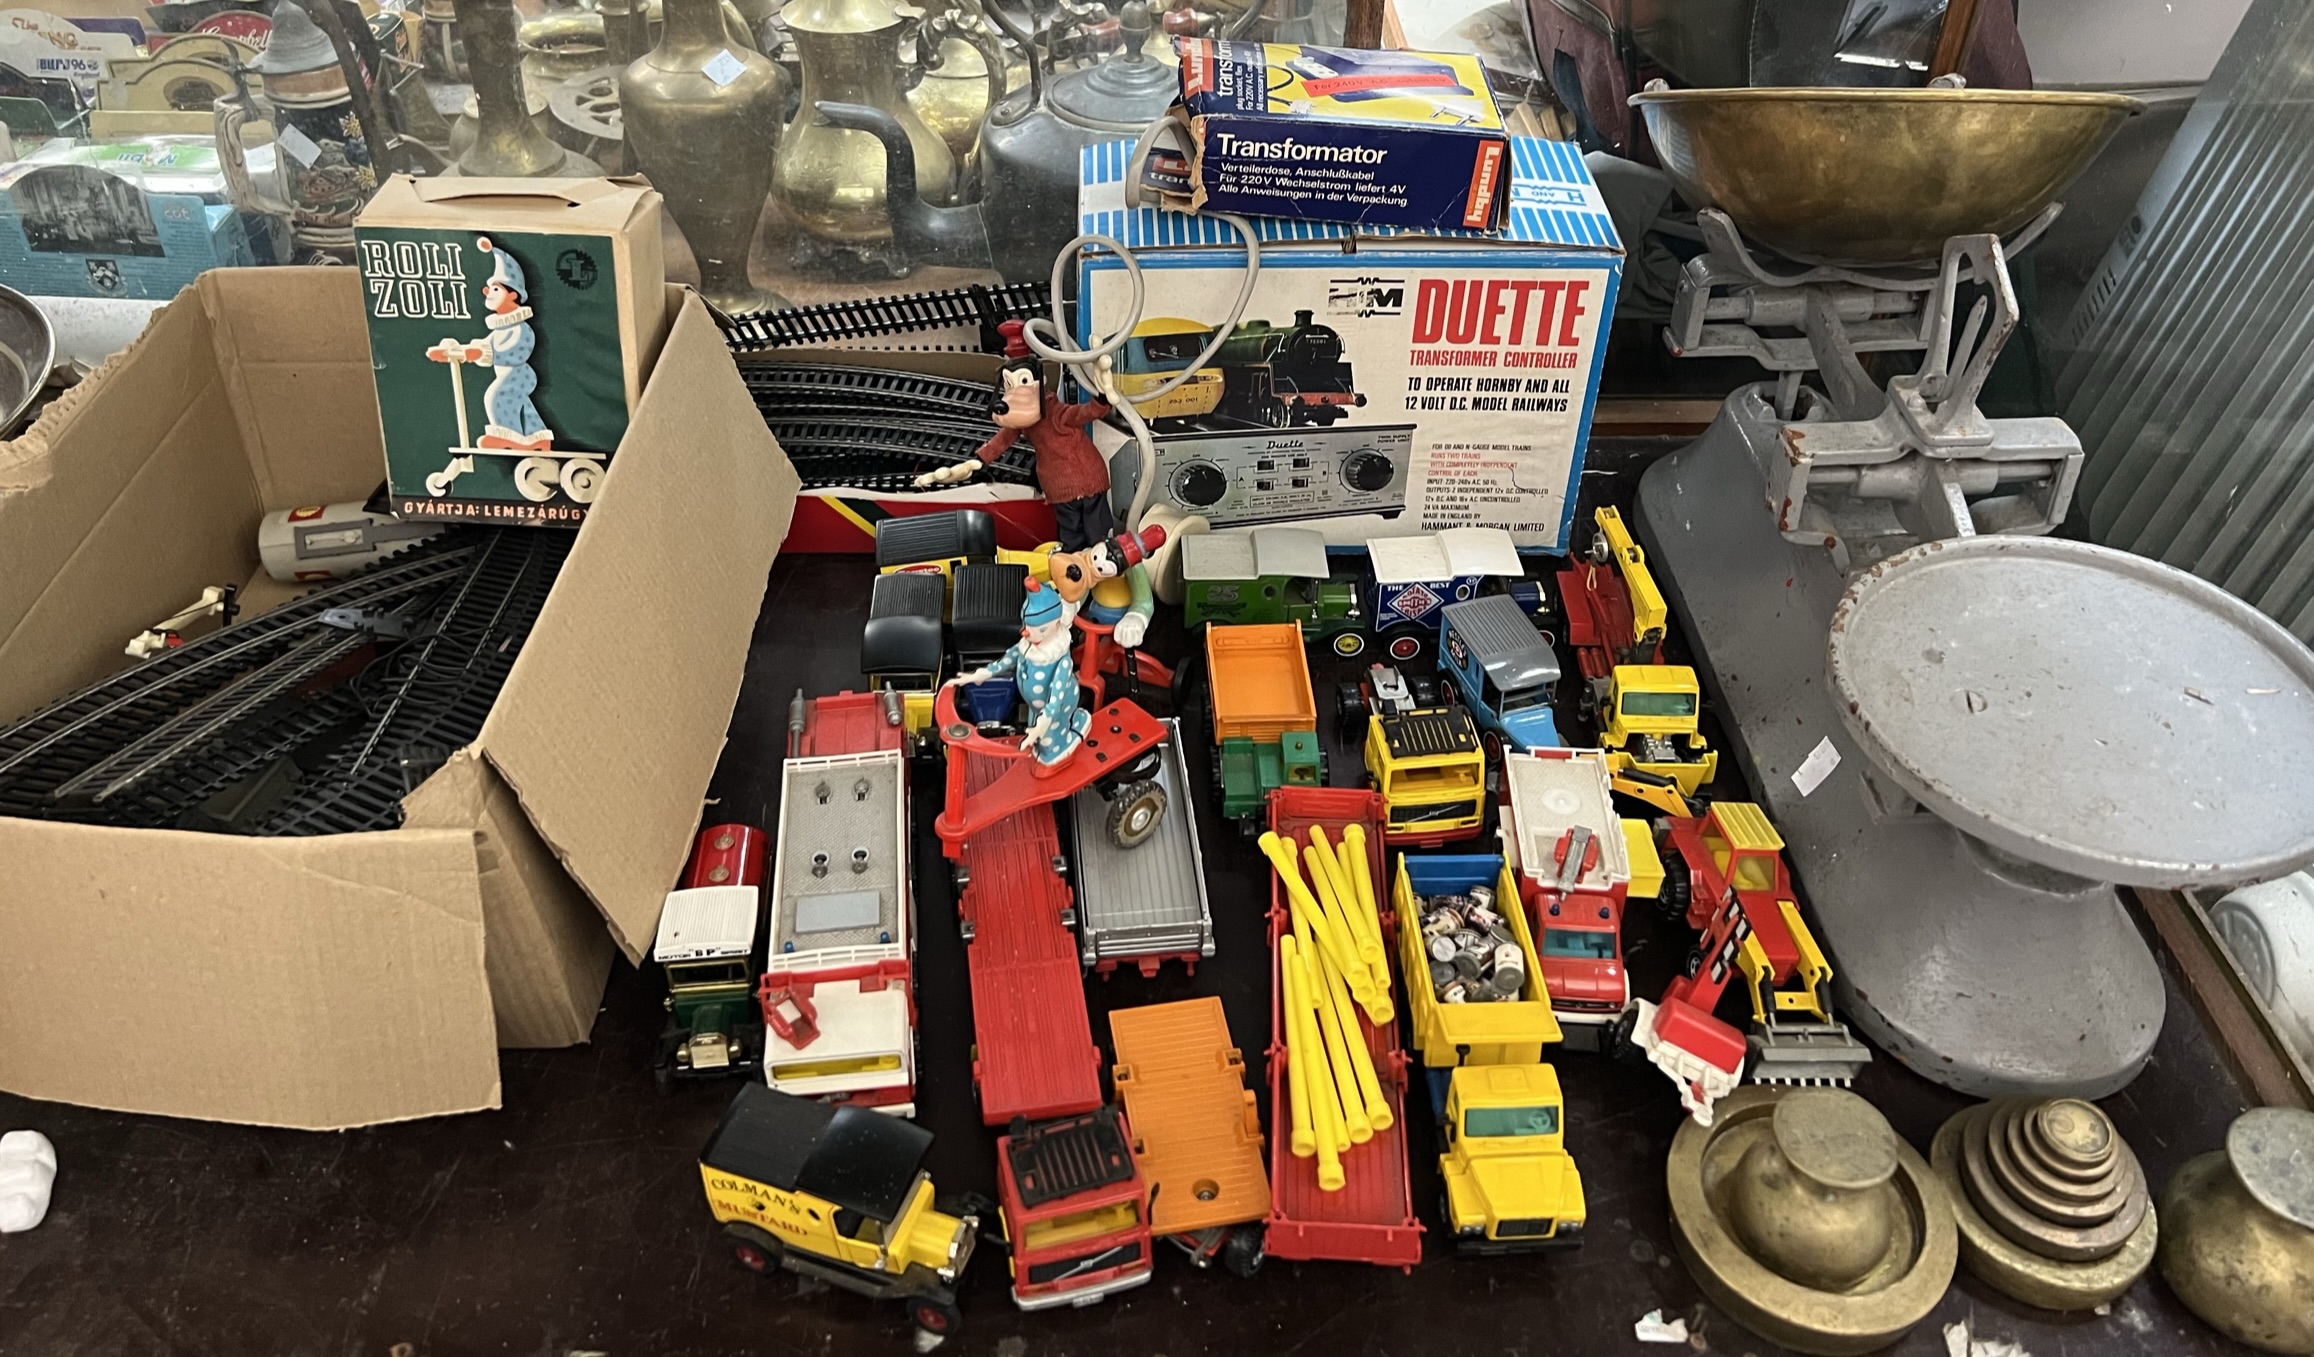 A Lemezarugyar Roli Zoli tinplate toy clown, boxed together with assorted model cars,